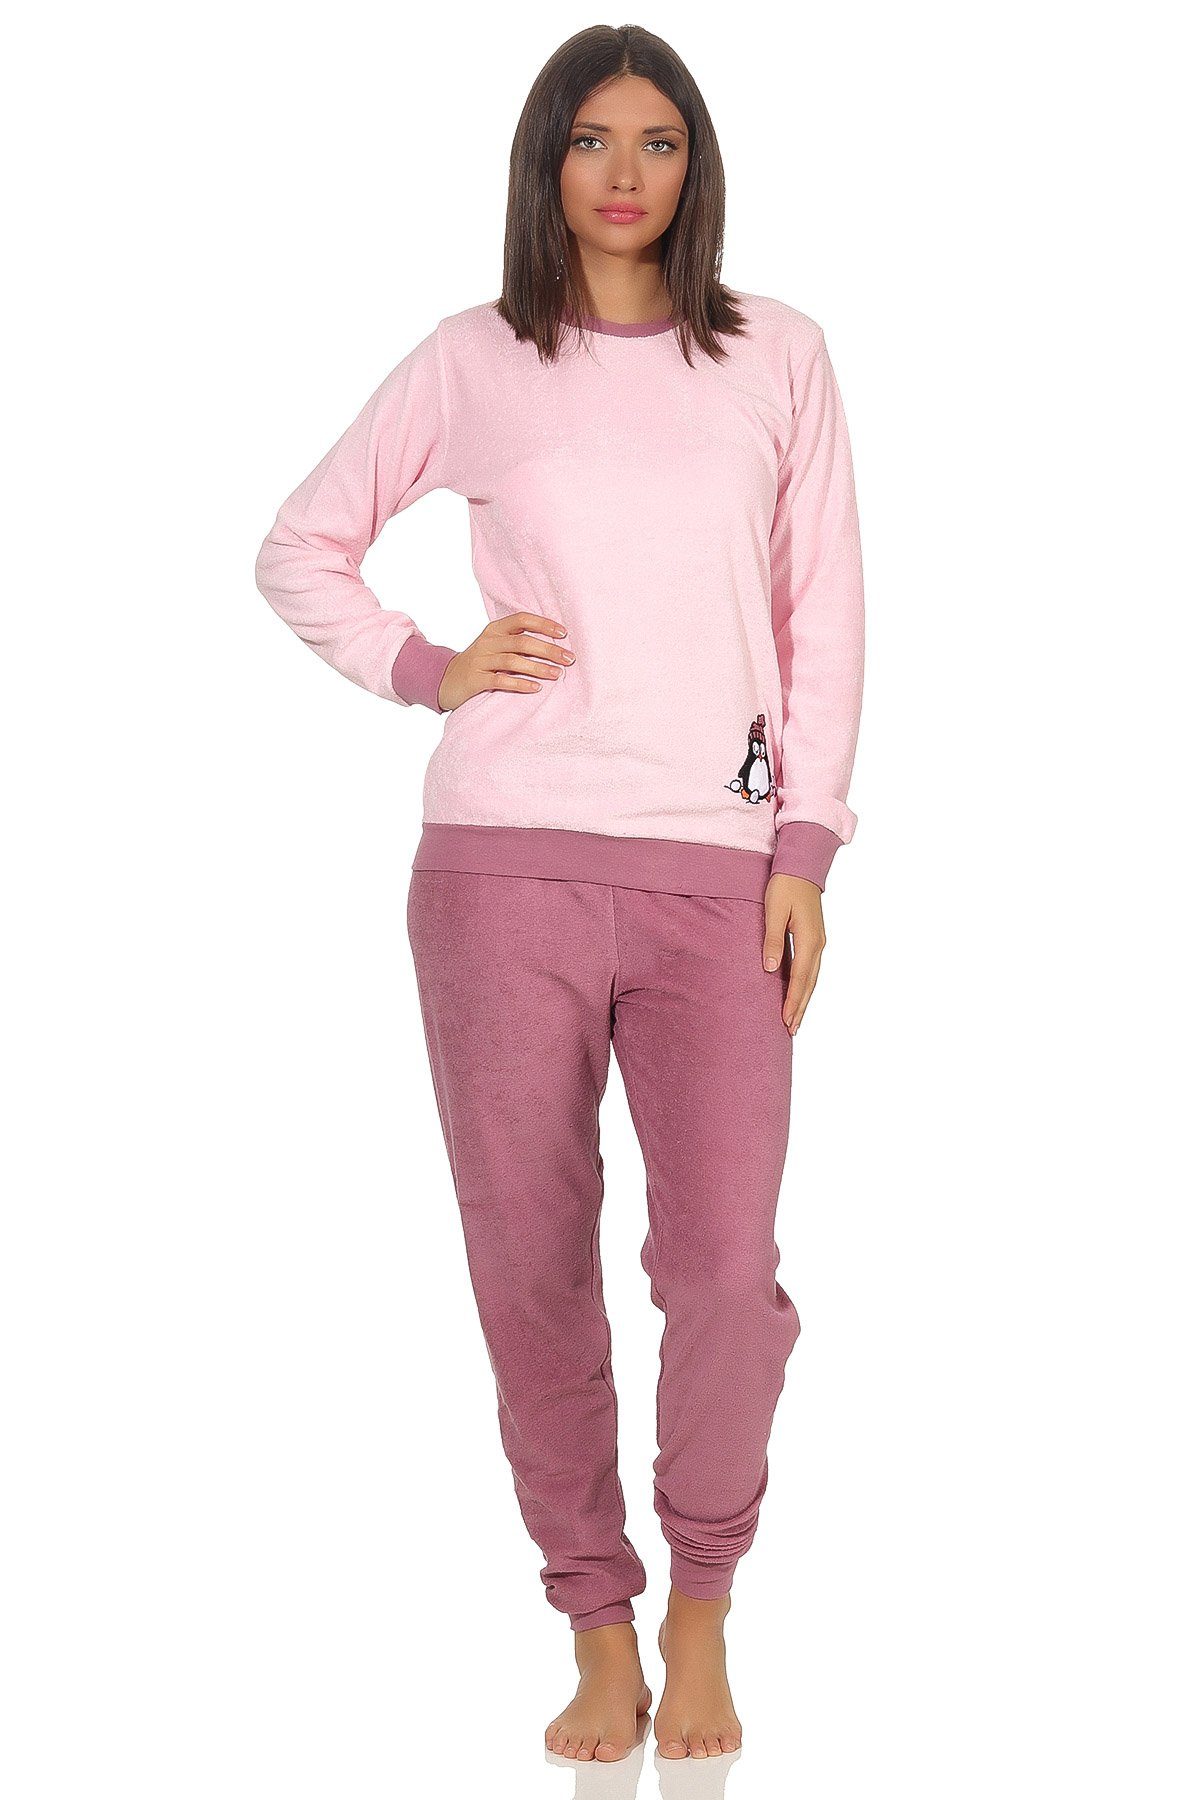 Pinguin rosa Normann Frottee süßem Damen Motiv Bündchen mit langarm Pyjama und Pyjama